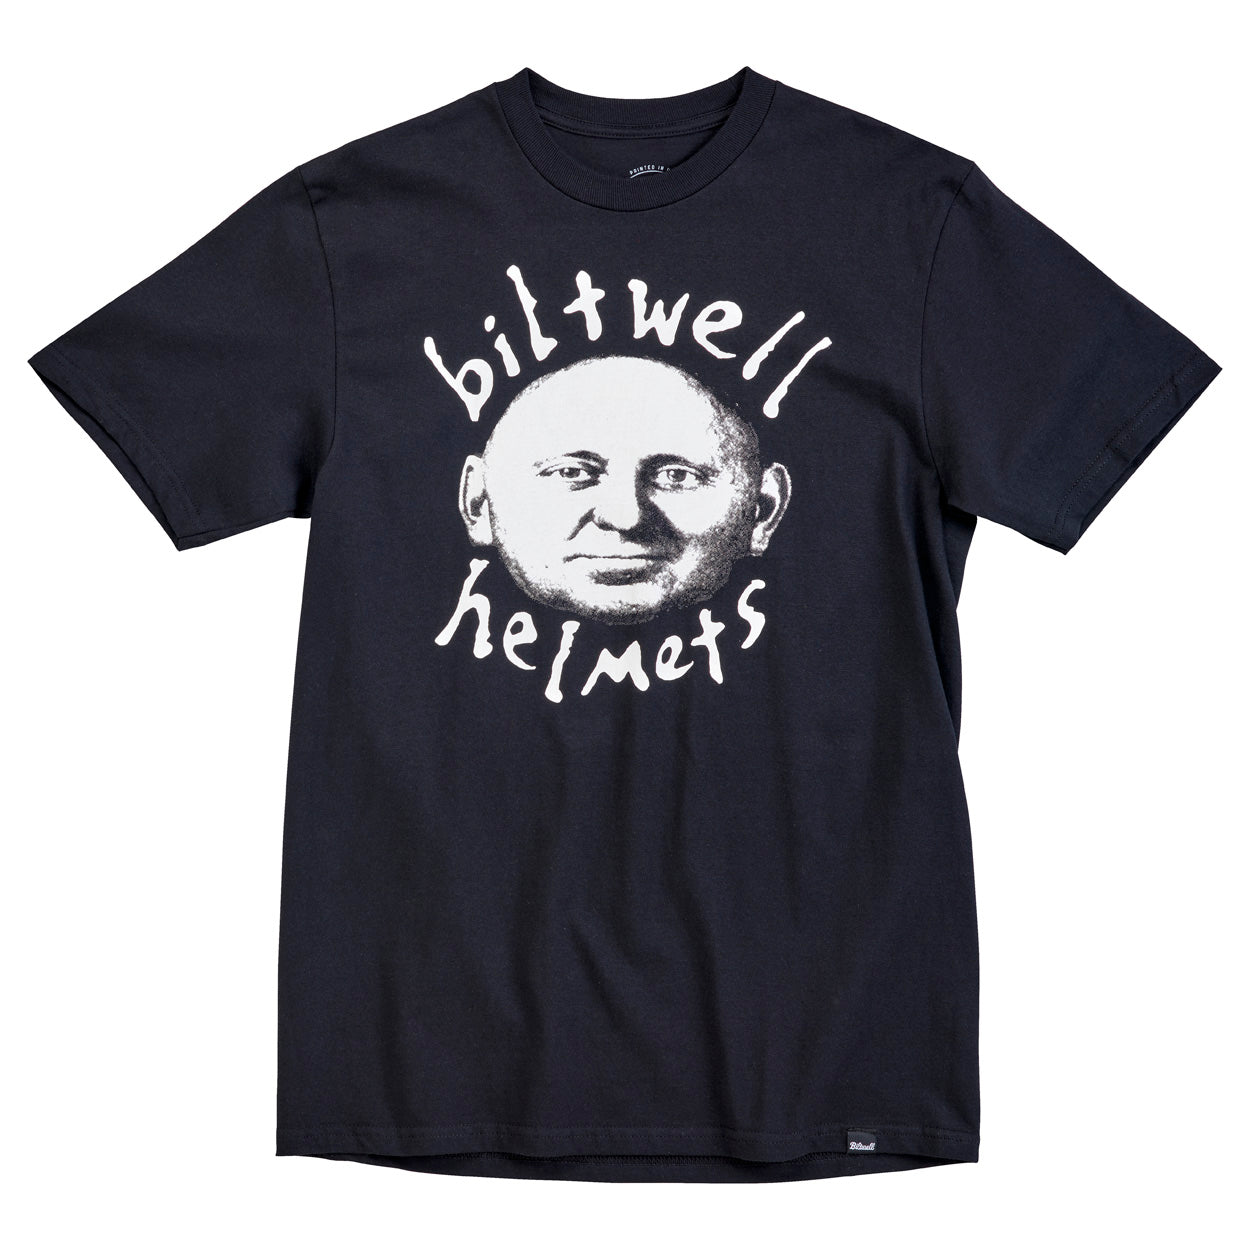 Mental Jimmys T-Shirt